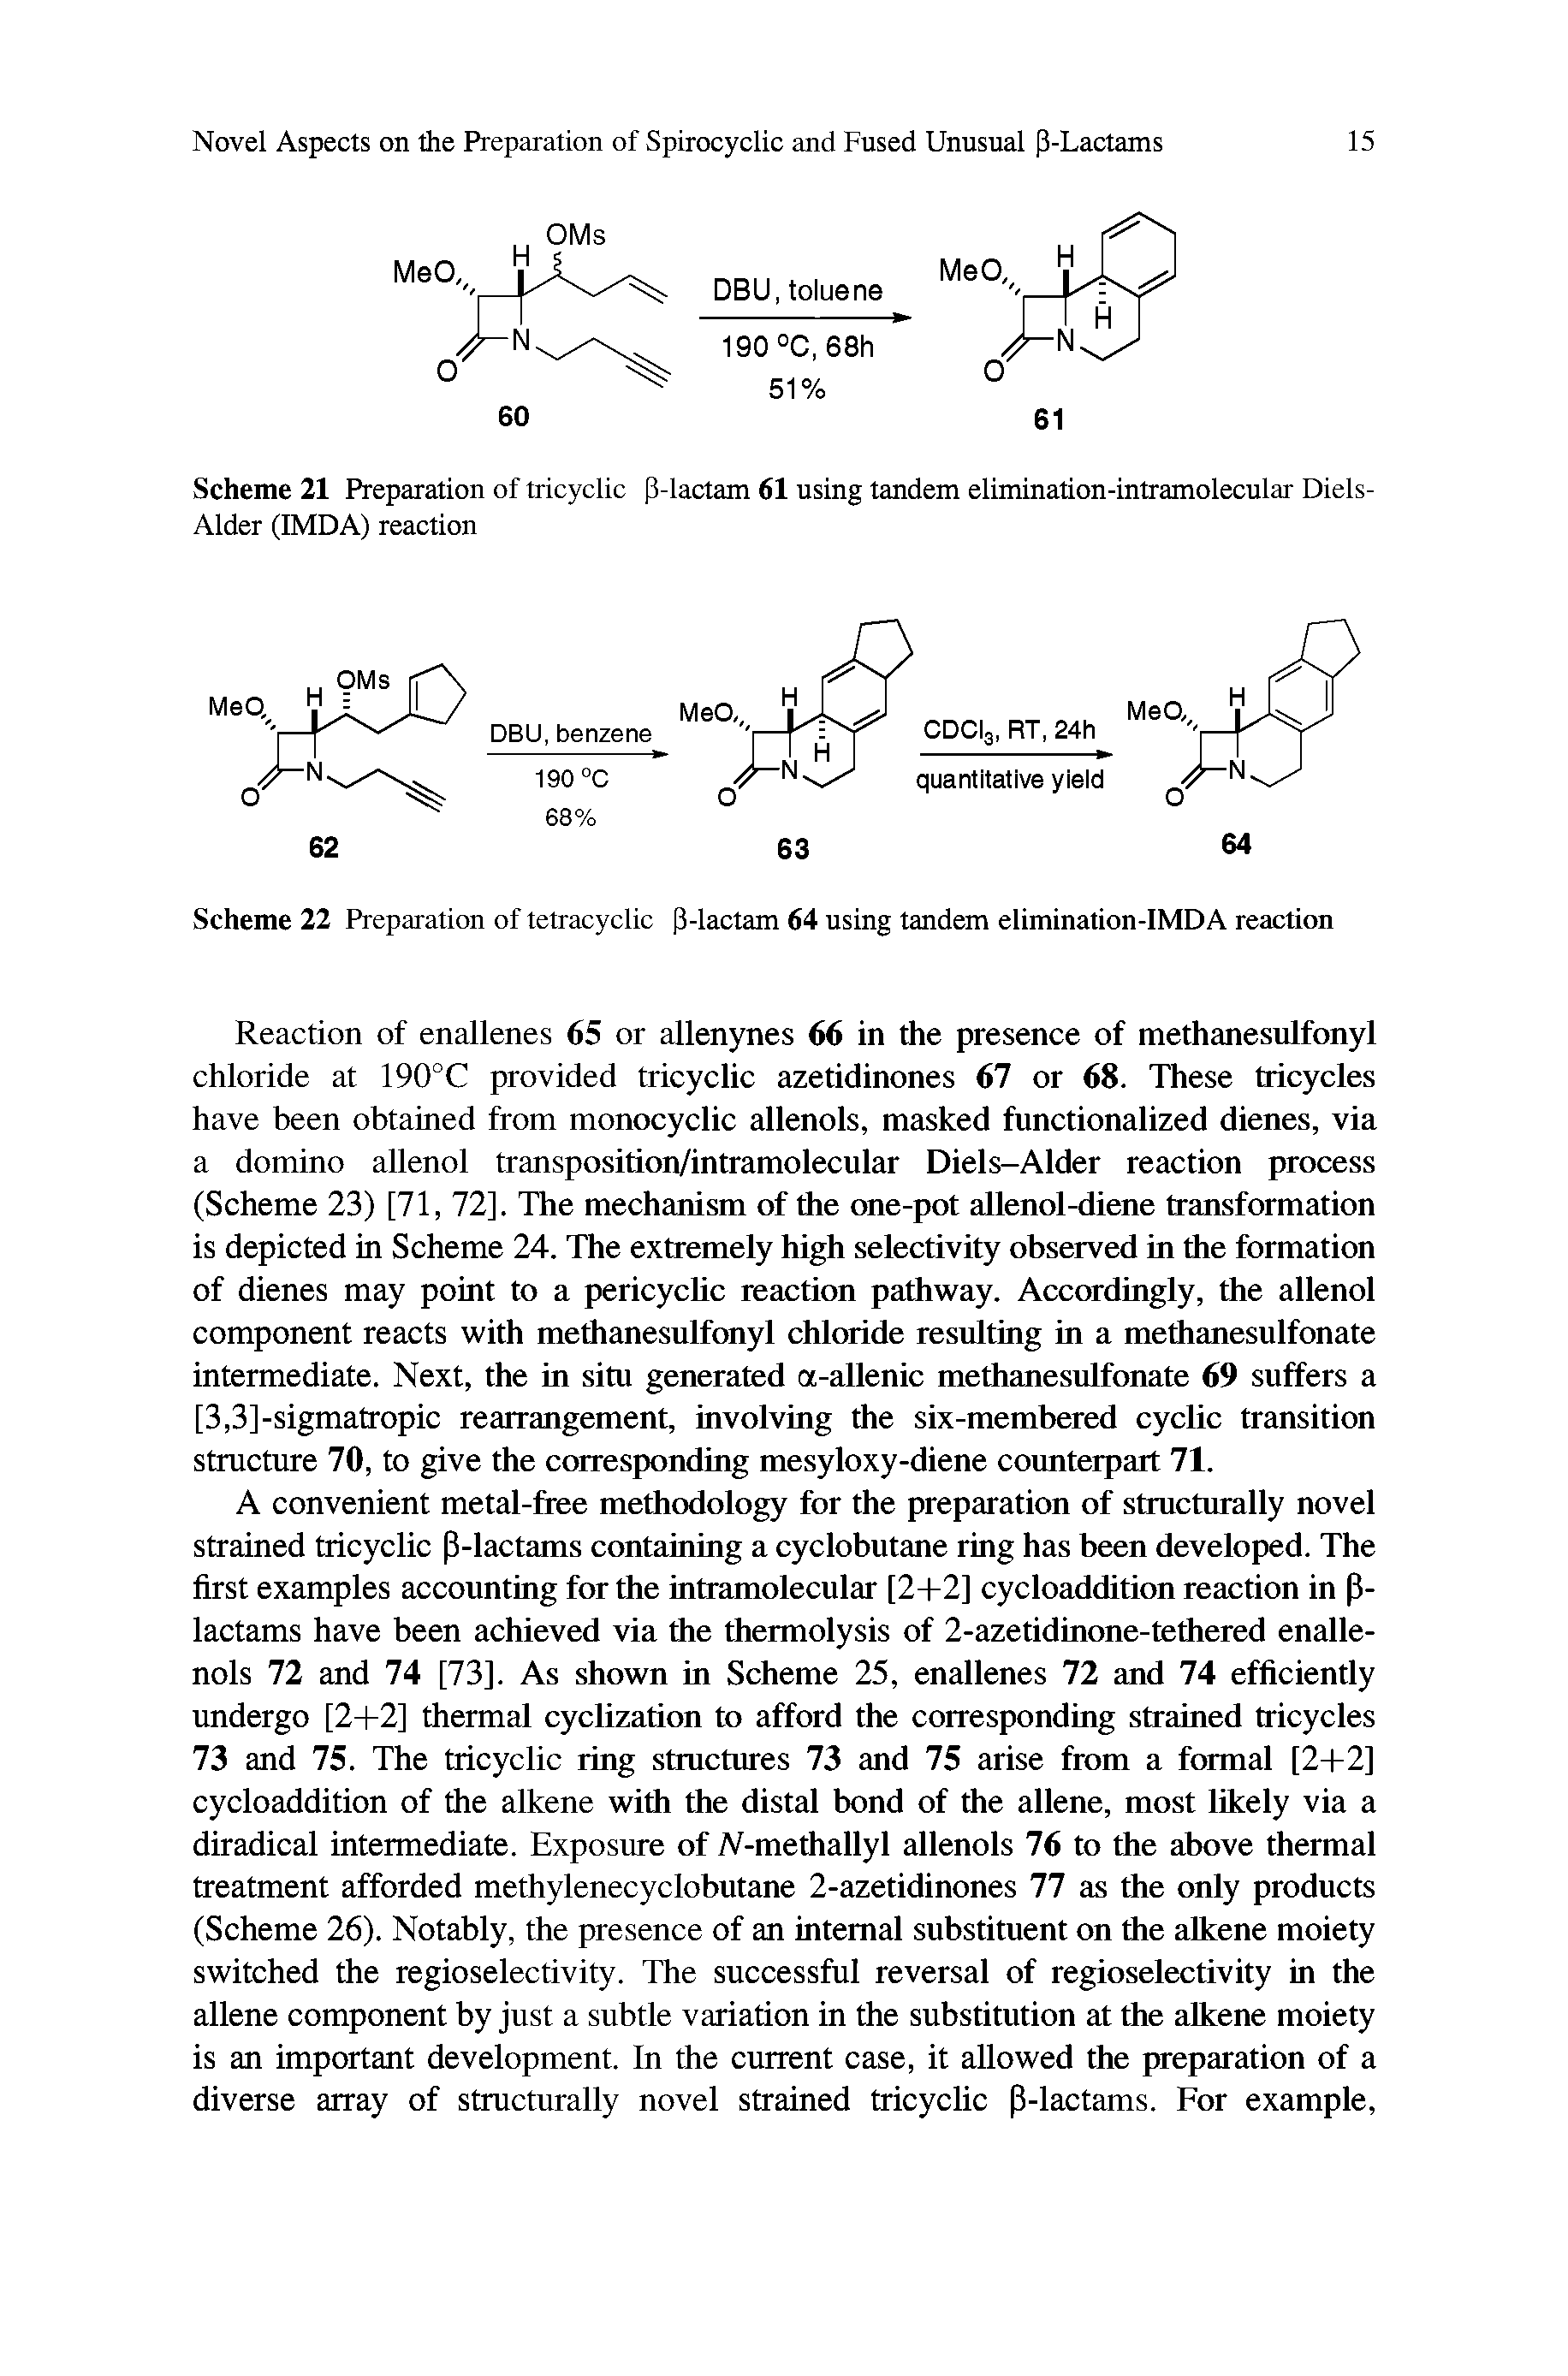 Scheme 21 Preparation of tricyclic [3-lactam 61 using tandem elimination-intramolecular Diels-Alder (IMDA) reaction...